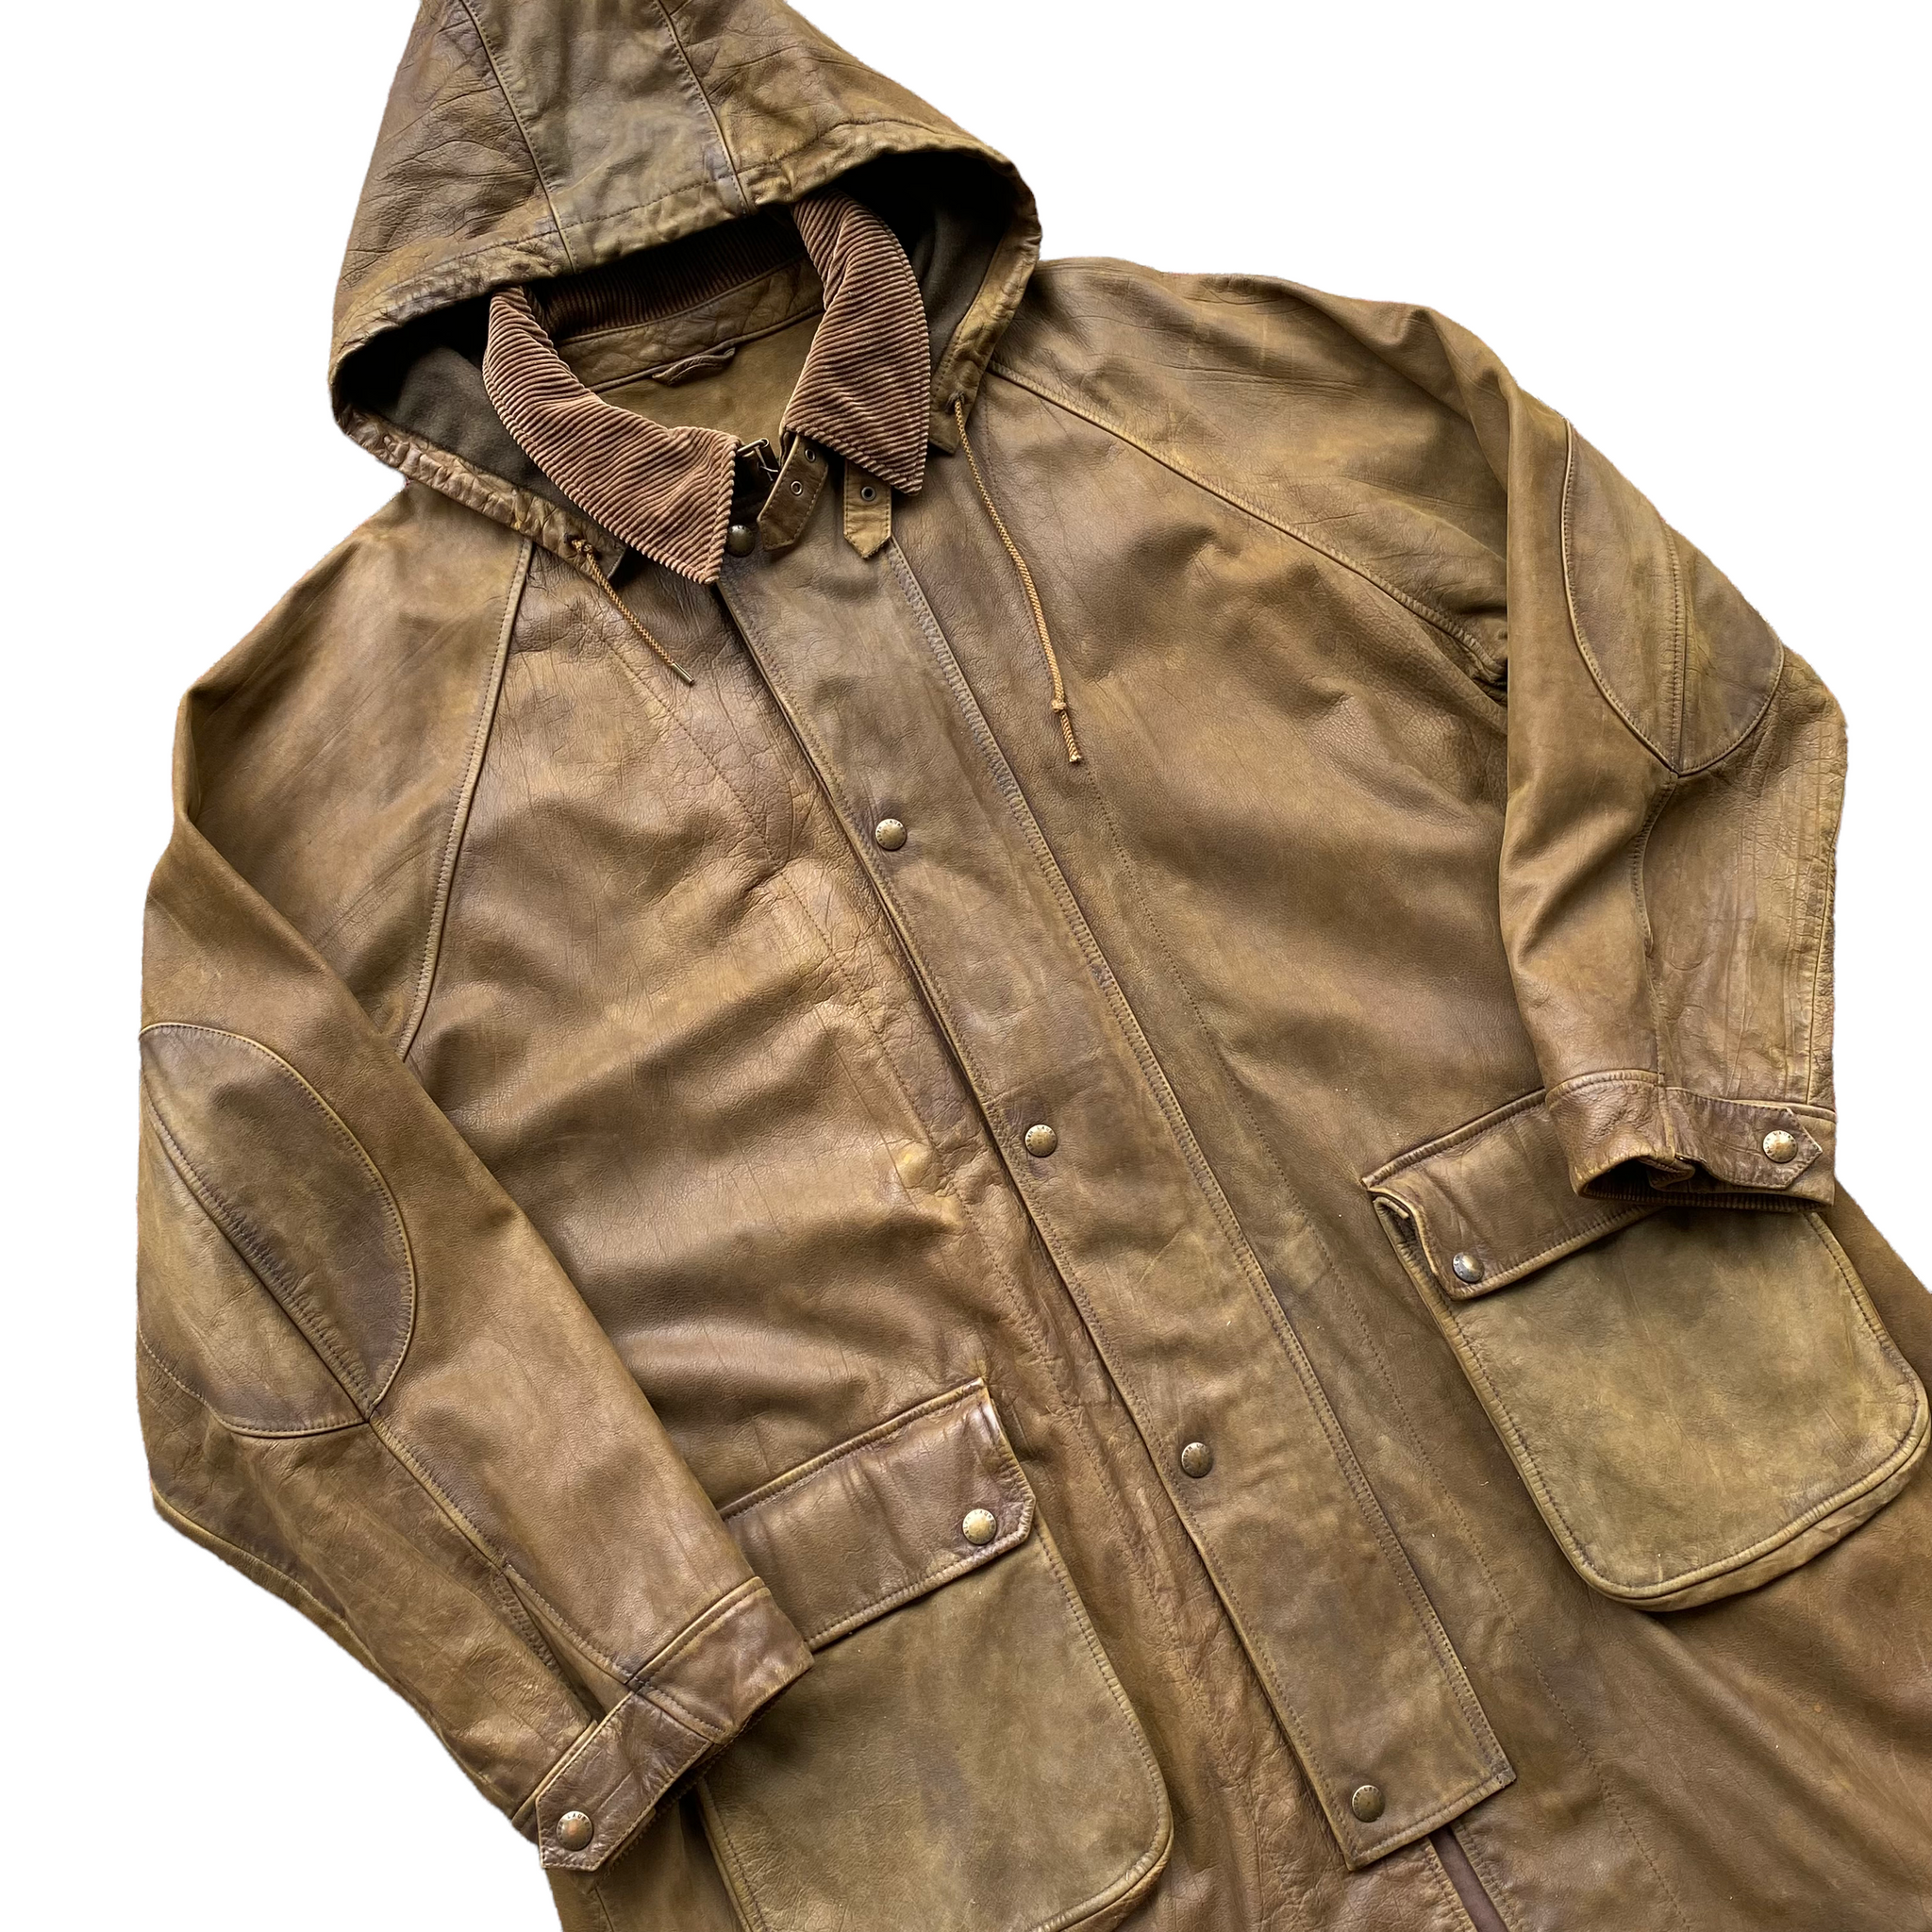 Polo ralph lauren leather trench coat XXL